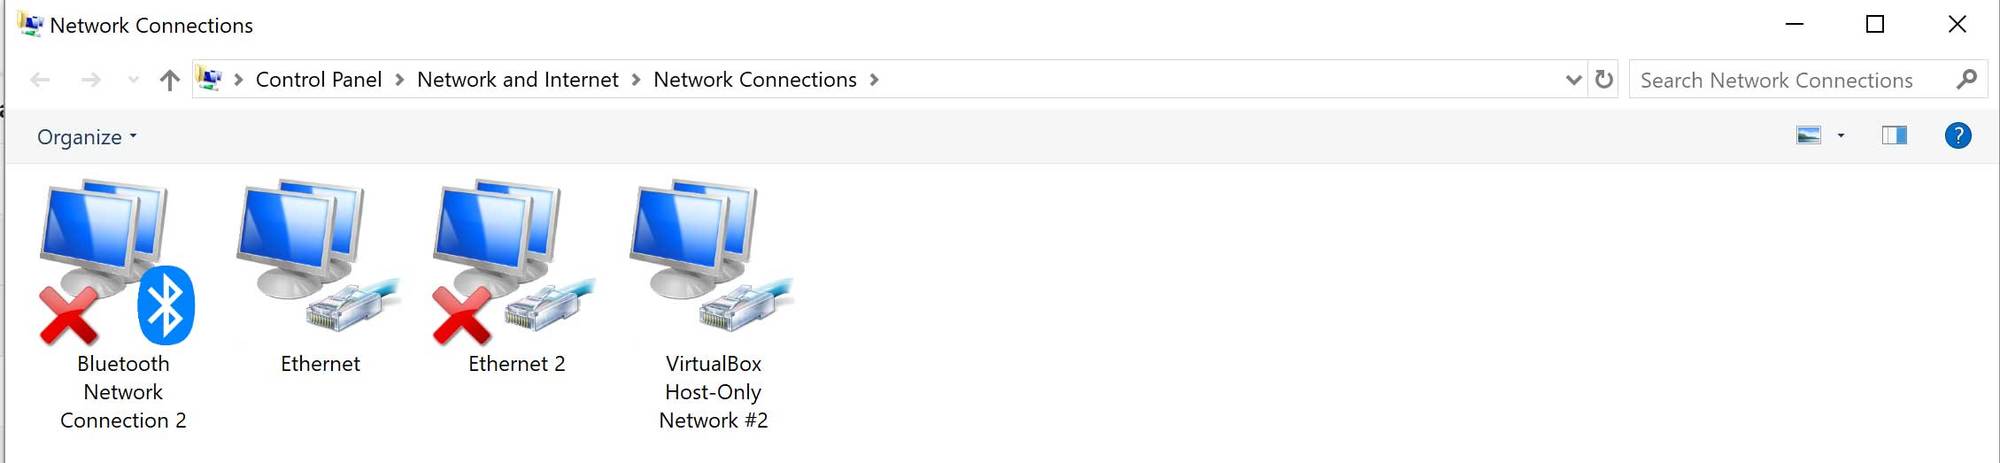 How do I configure a VPN connection to my Windows 10 machine? ca4773ae-9605-477d-b7b1-16ae6c058e83?upload=true.jpg